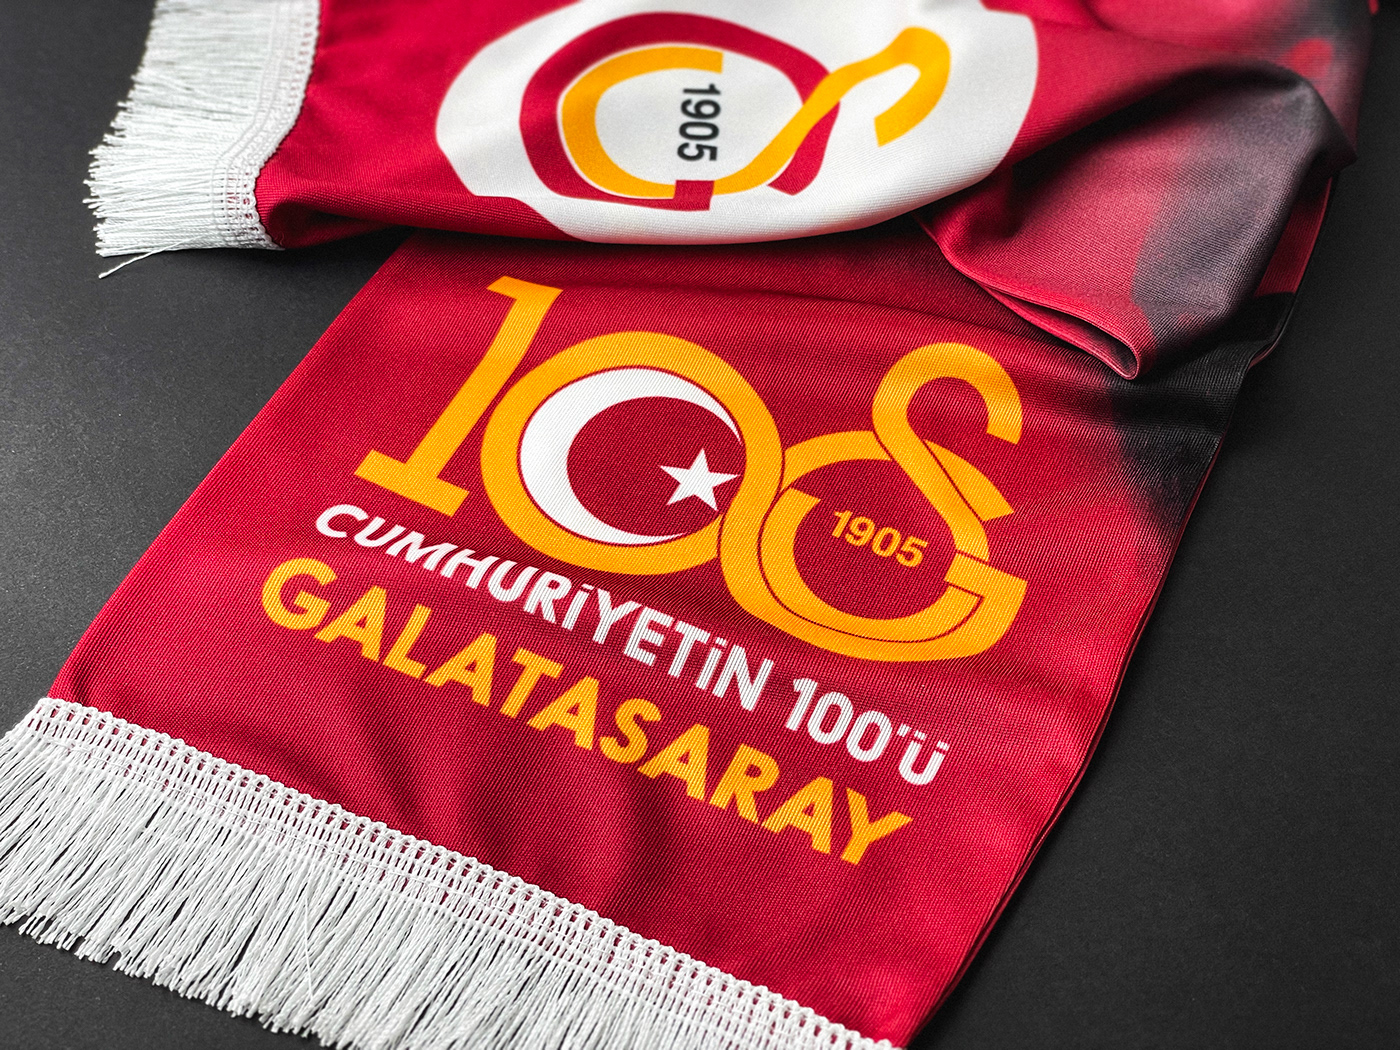 100 years Aksel Ceylan arti studyo Ataturk cumhuriyet cumhuriyetin 100u galatasaray Kaan Duygu türkiye football